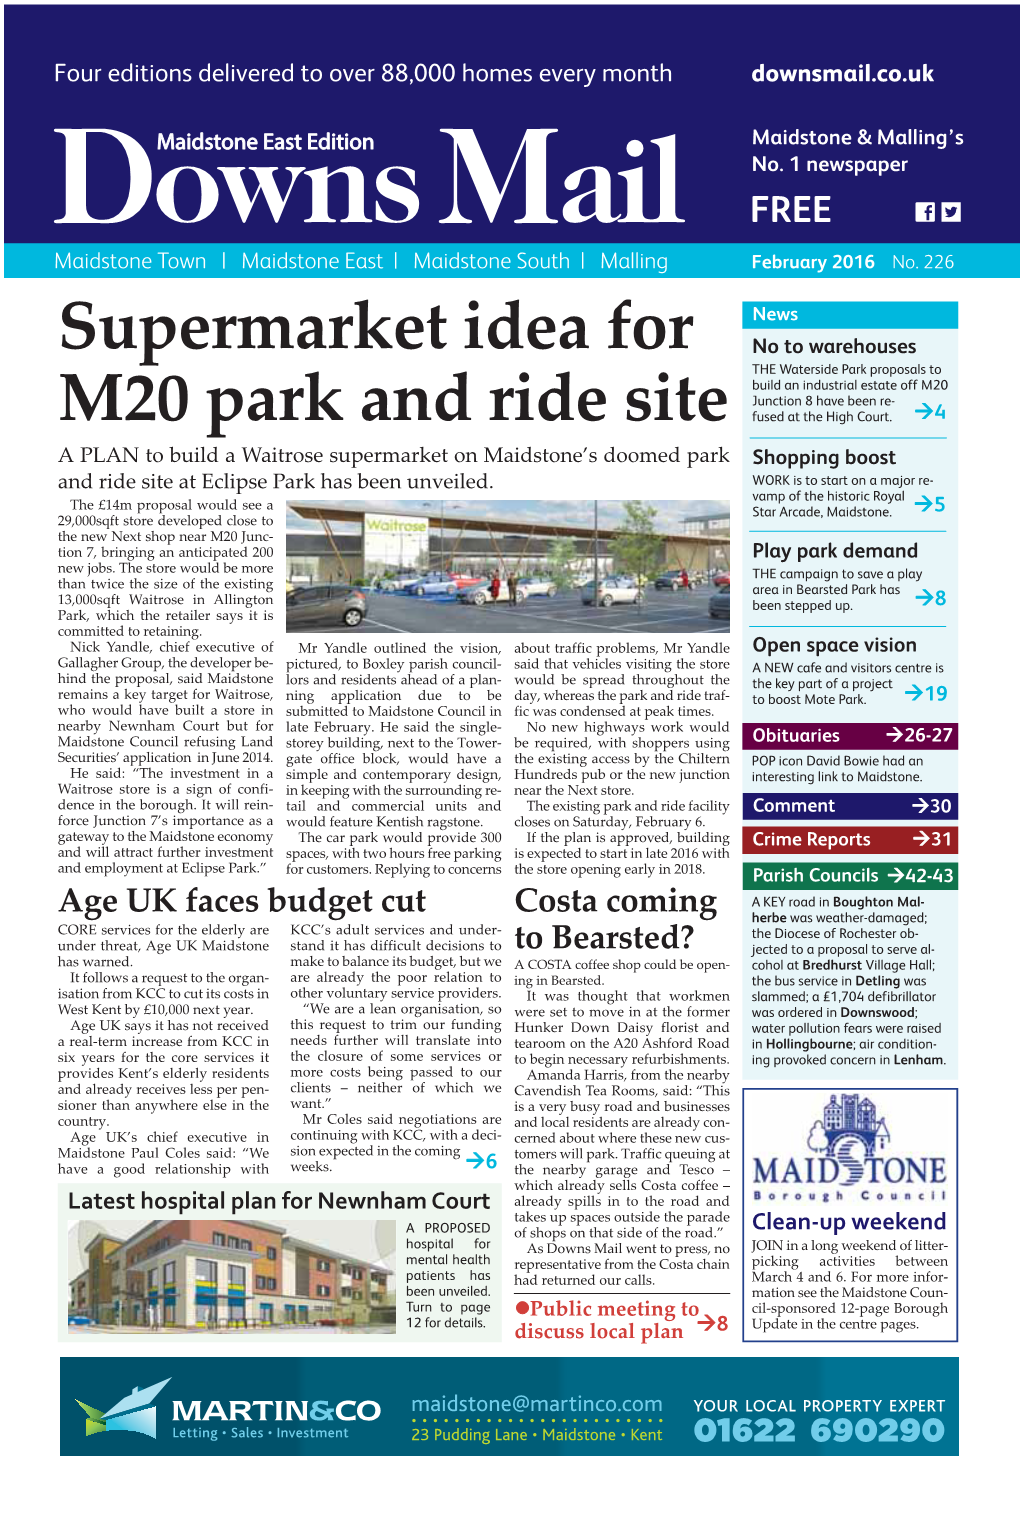 Supermarket Idea for M20 Park and Ride Site